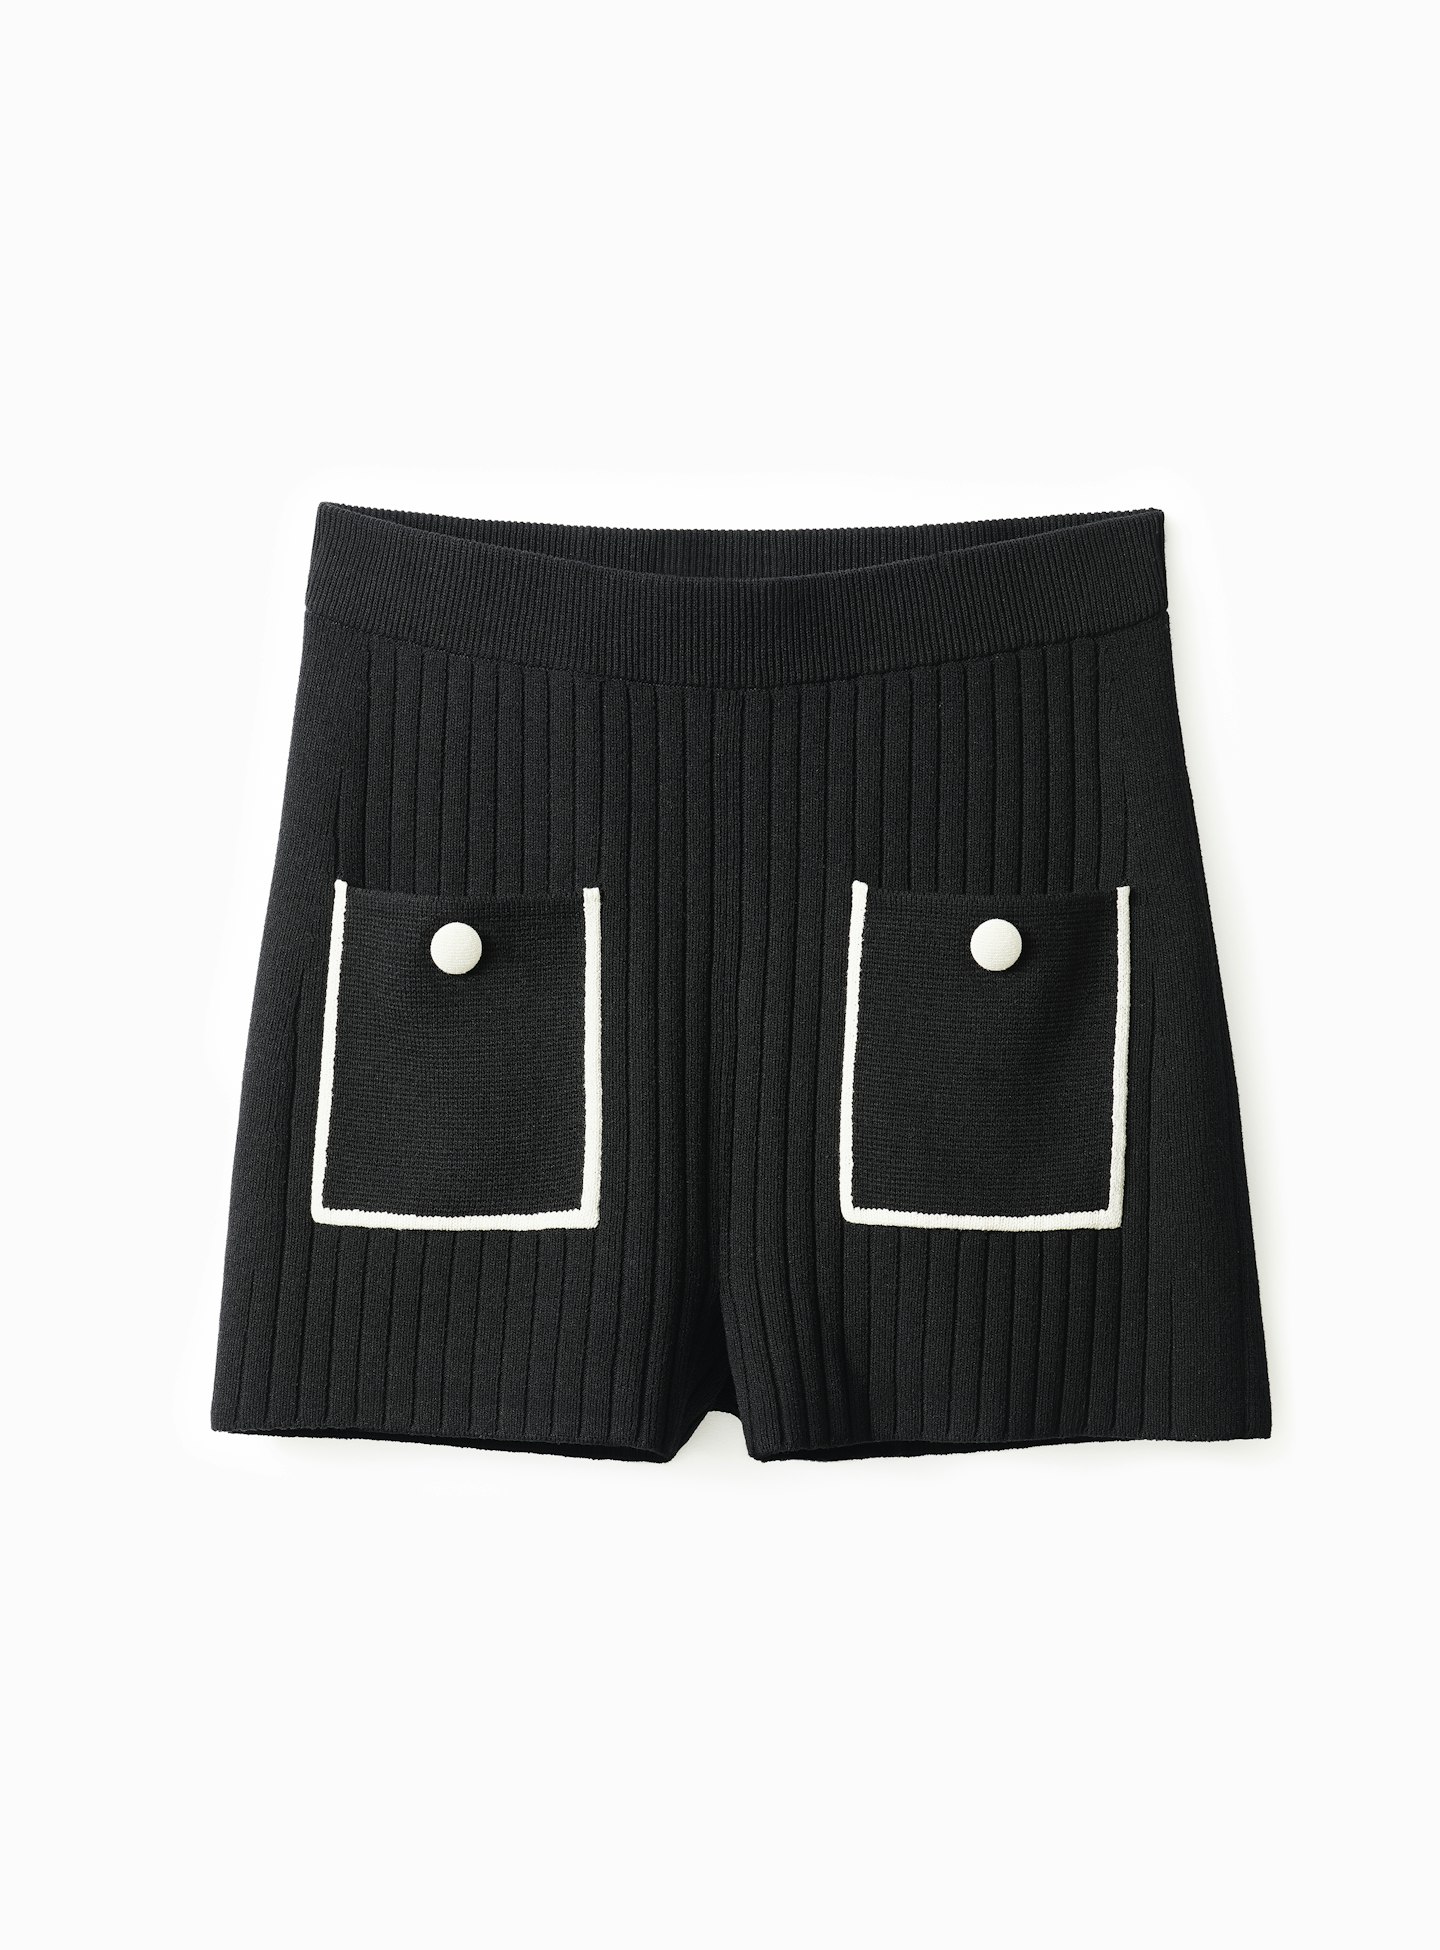 Shorts, £19.99